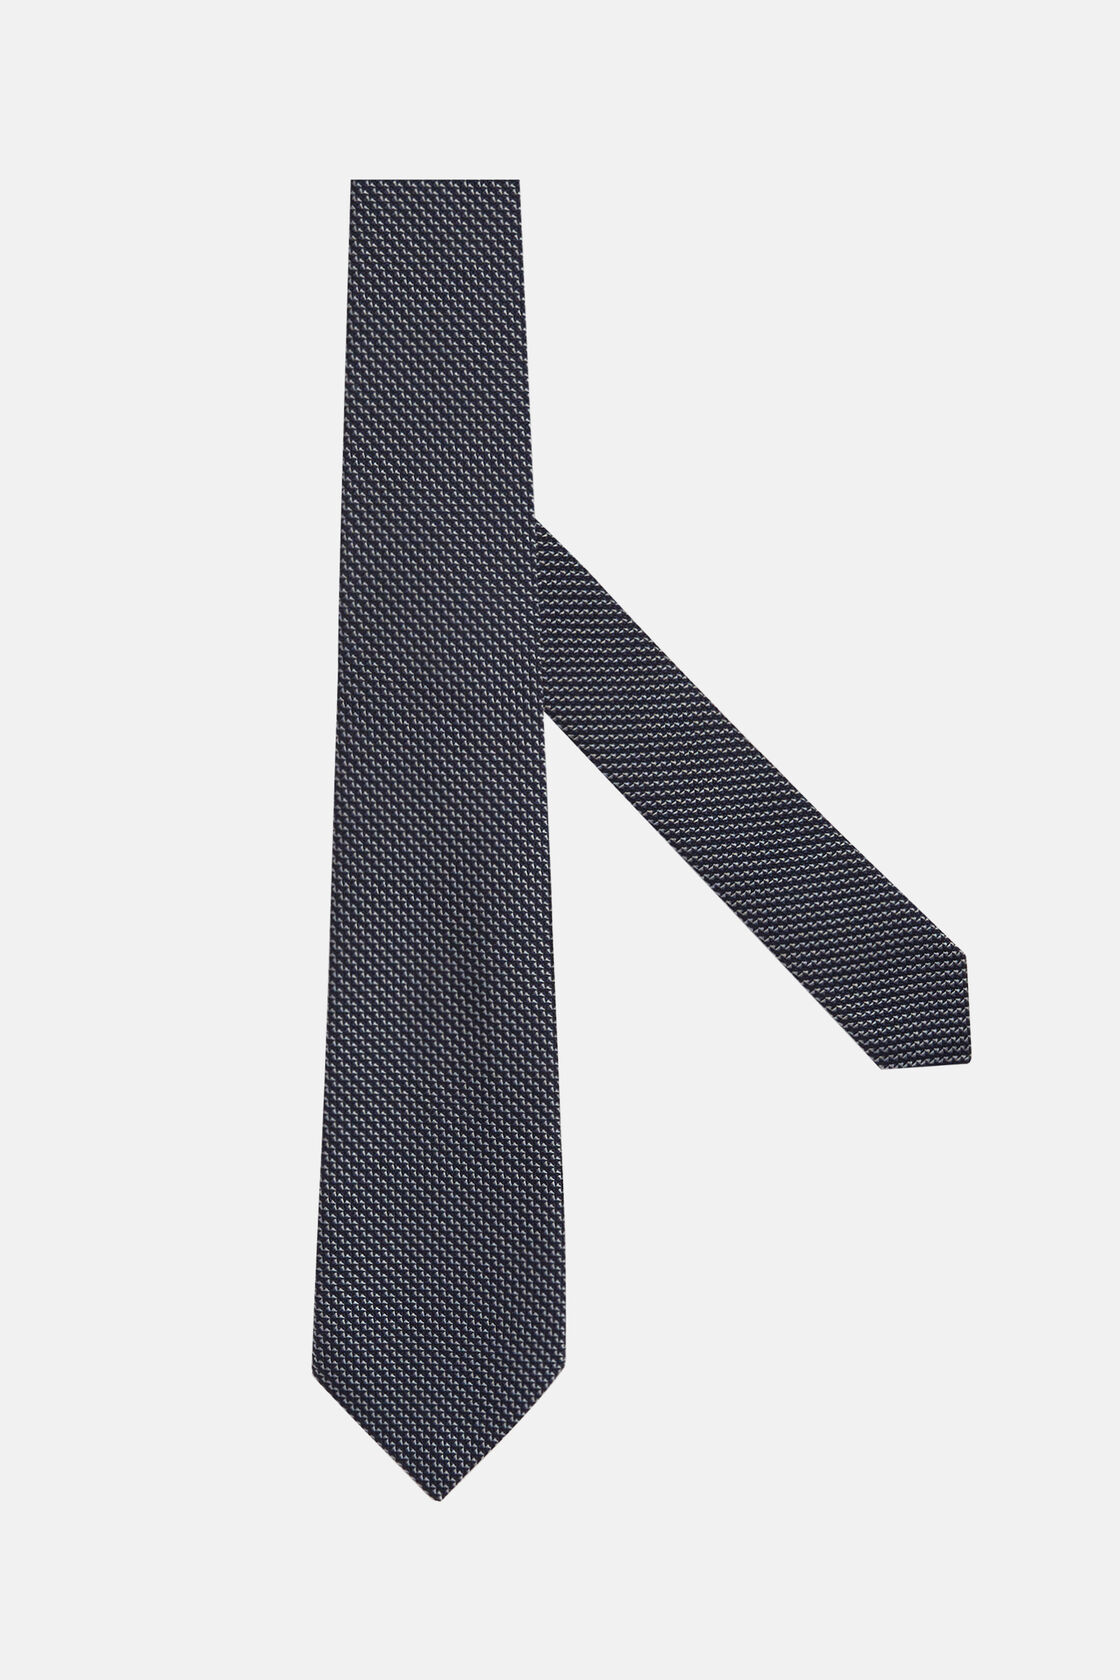 Jedwabny odświętny krawat, Navy blue, hi-res